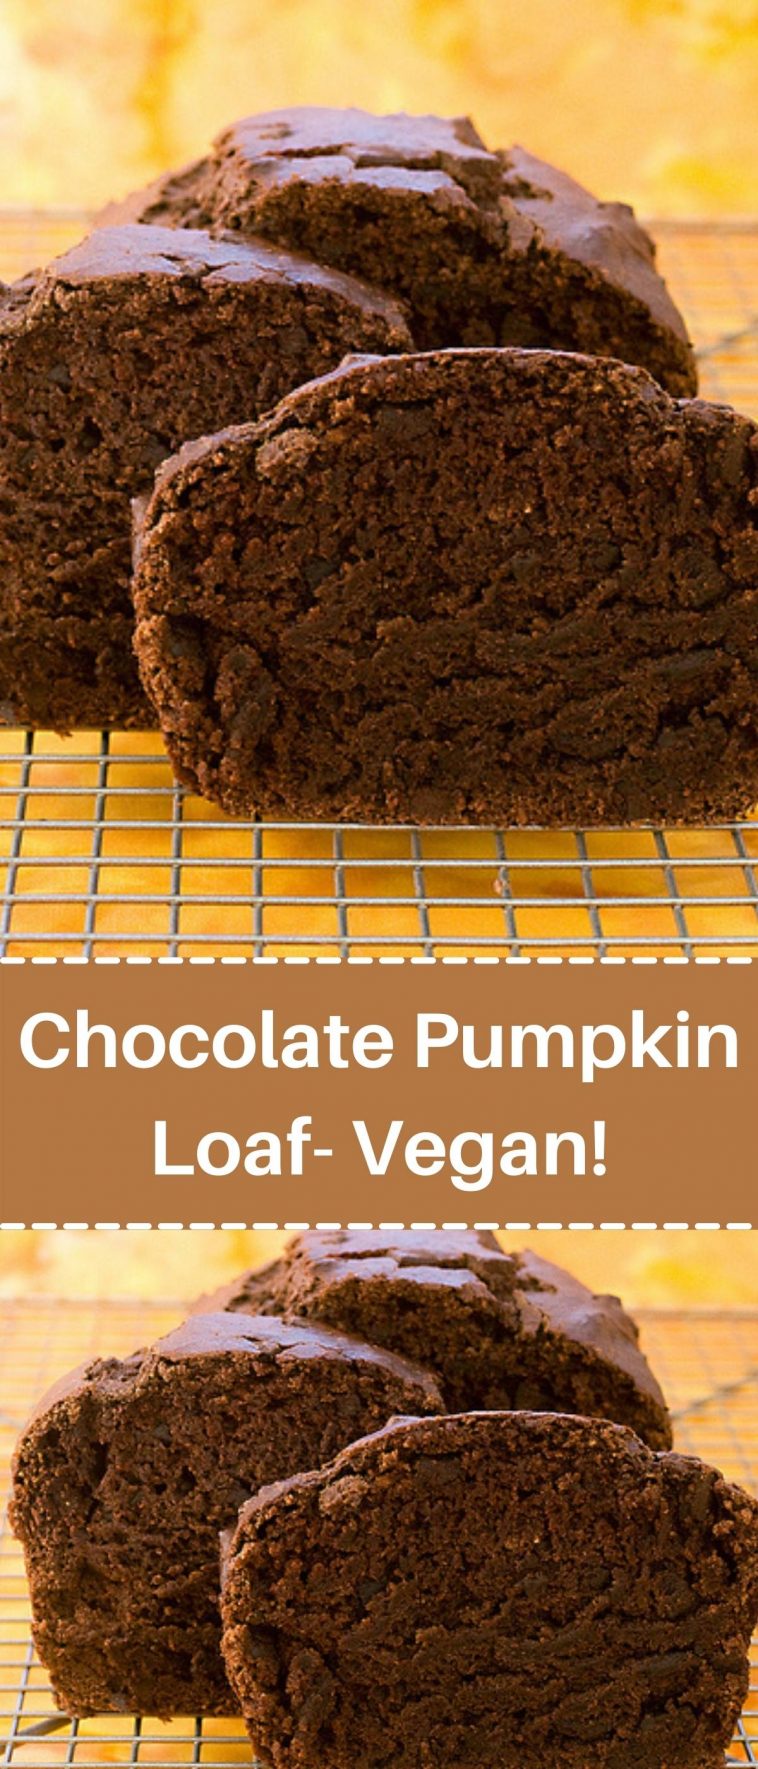 Chocolate Pumpkin Loaf- Vegan!